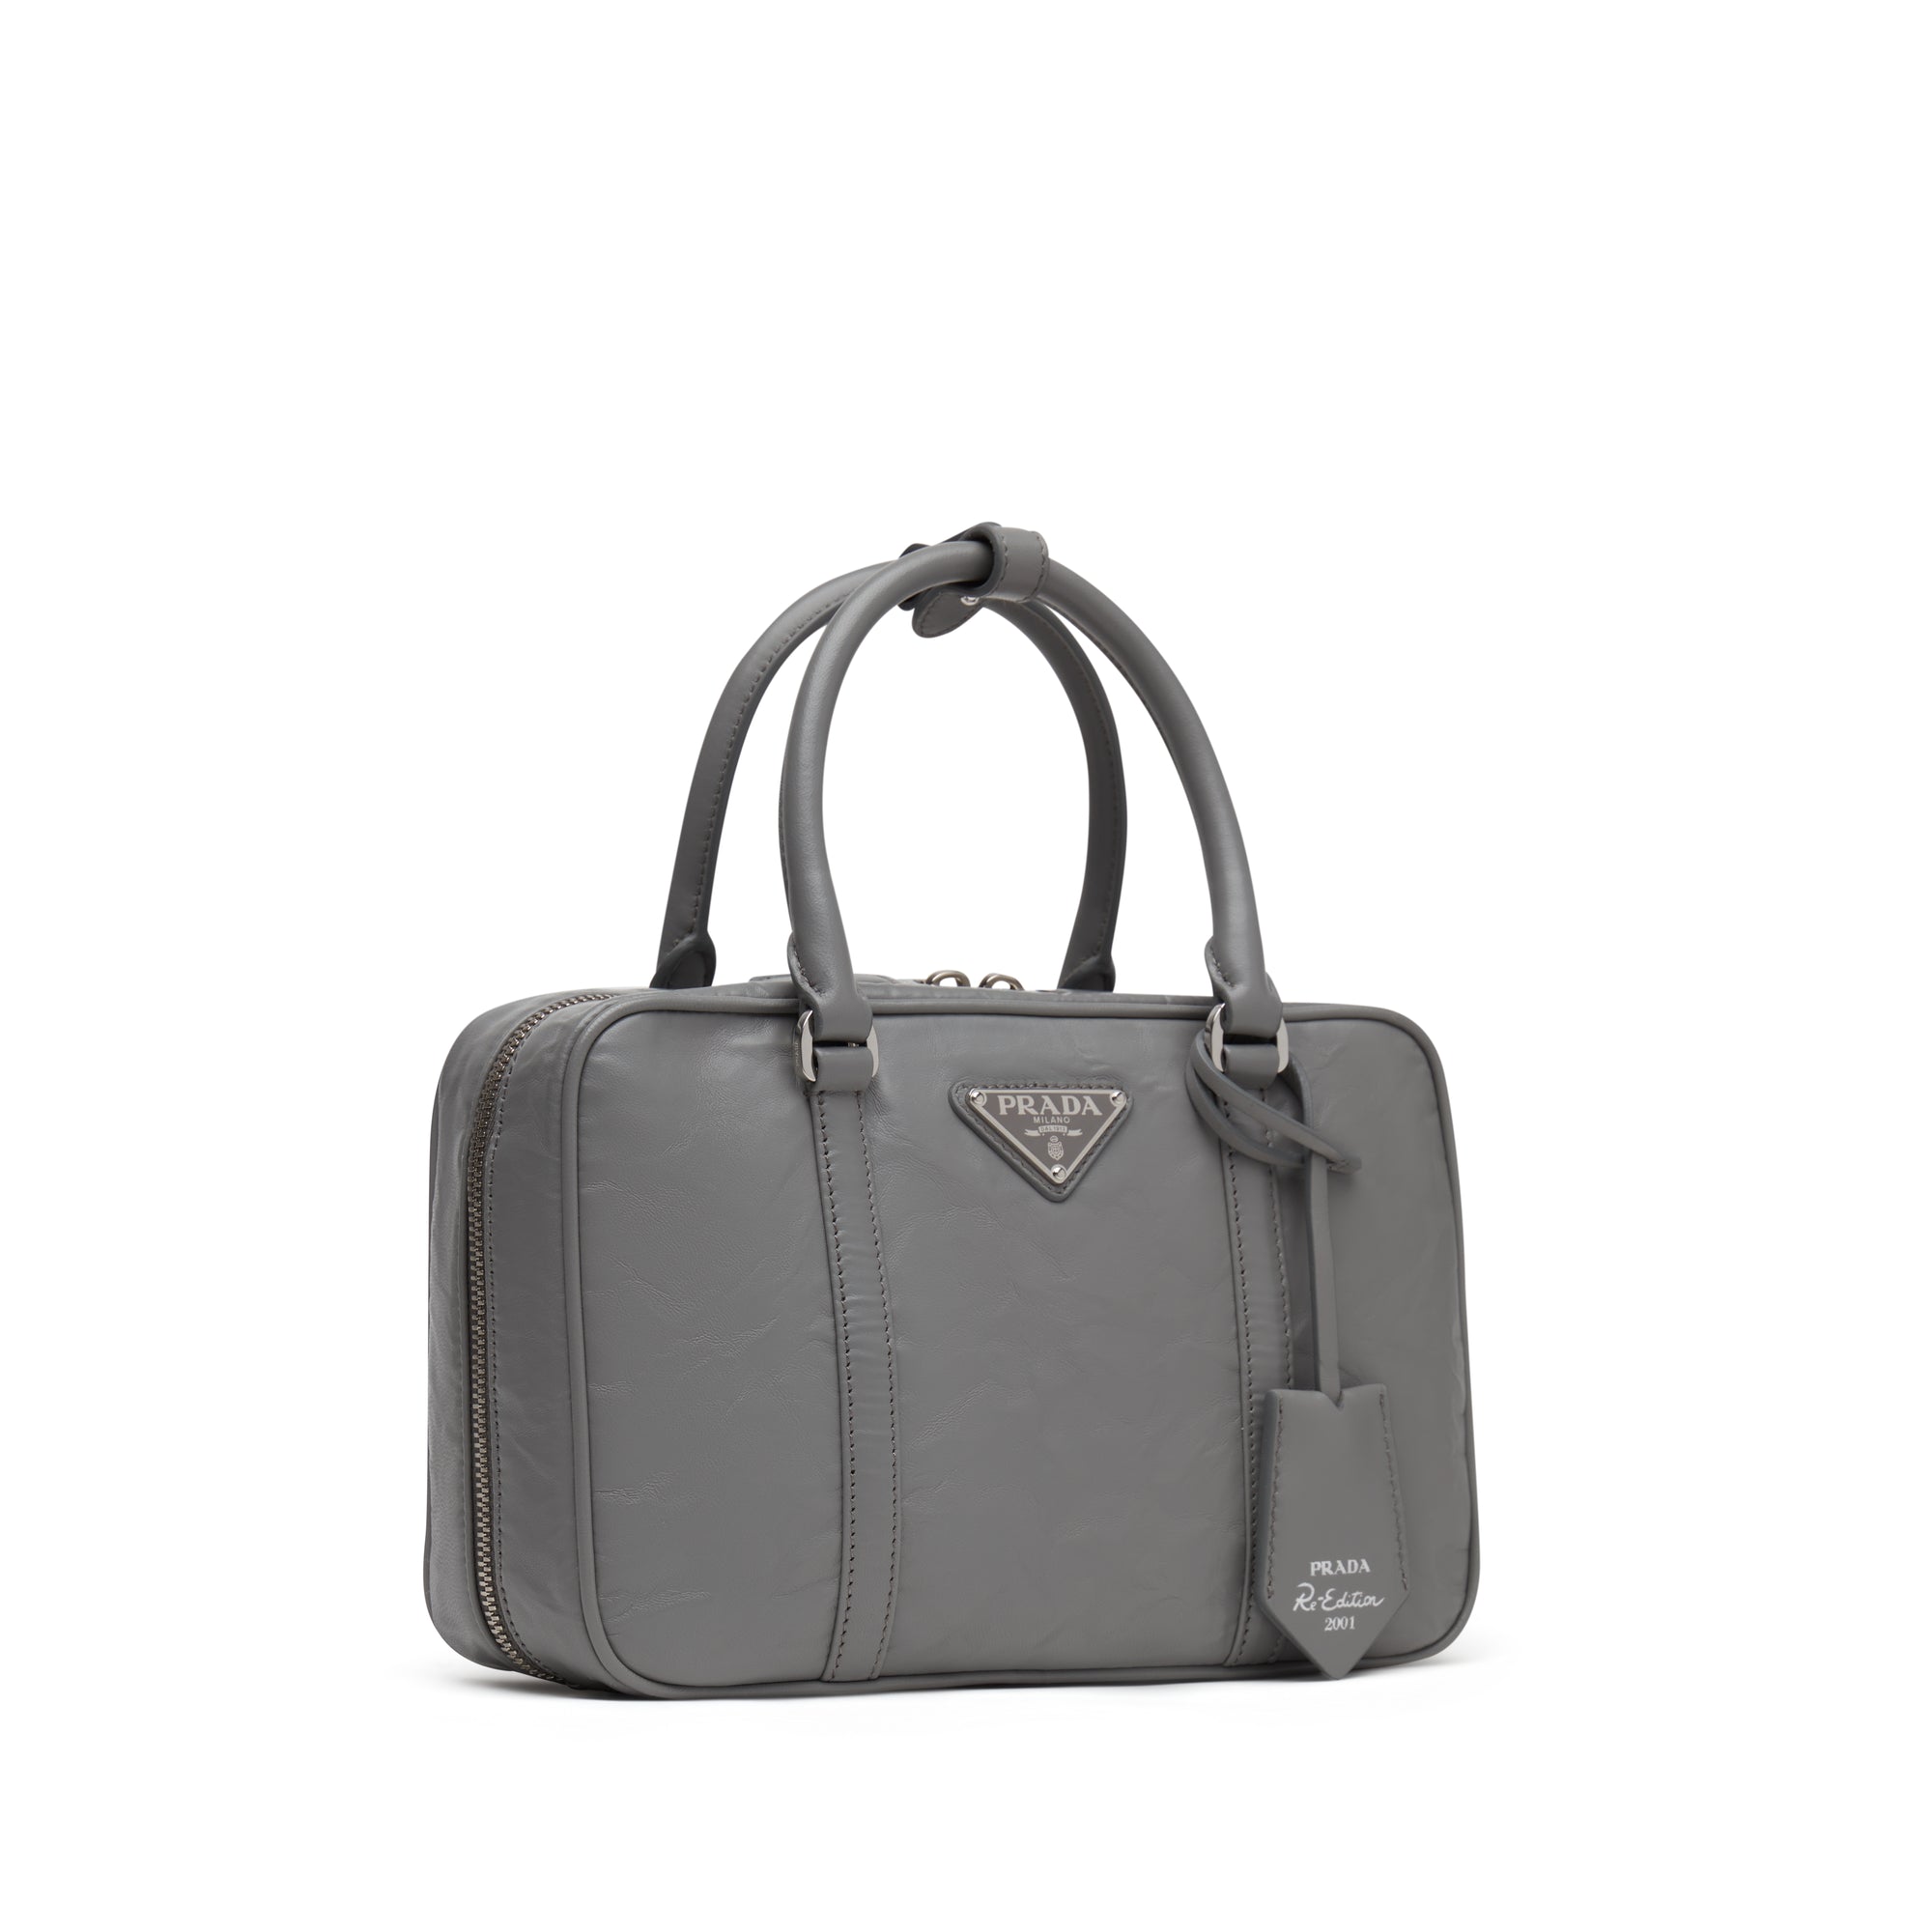 Prada - Women’s Medium Top Handle Handbag - (Slate Grey) view 2